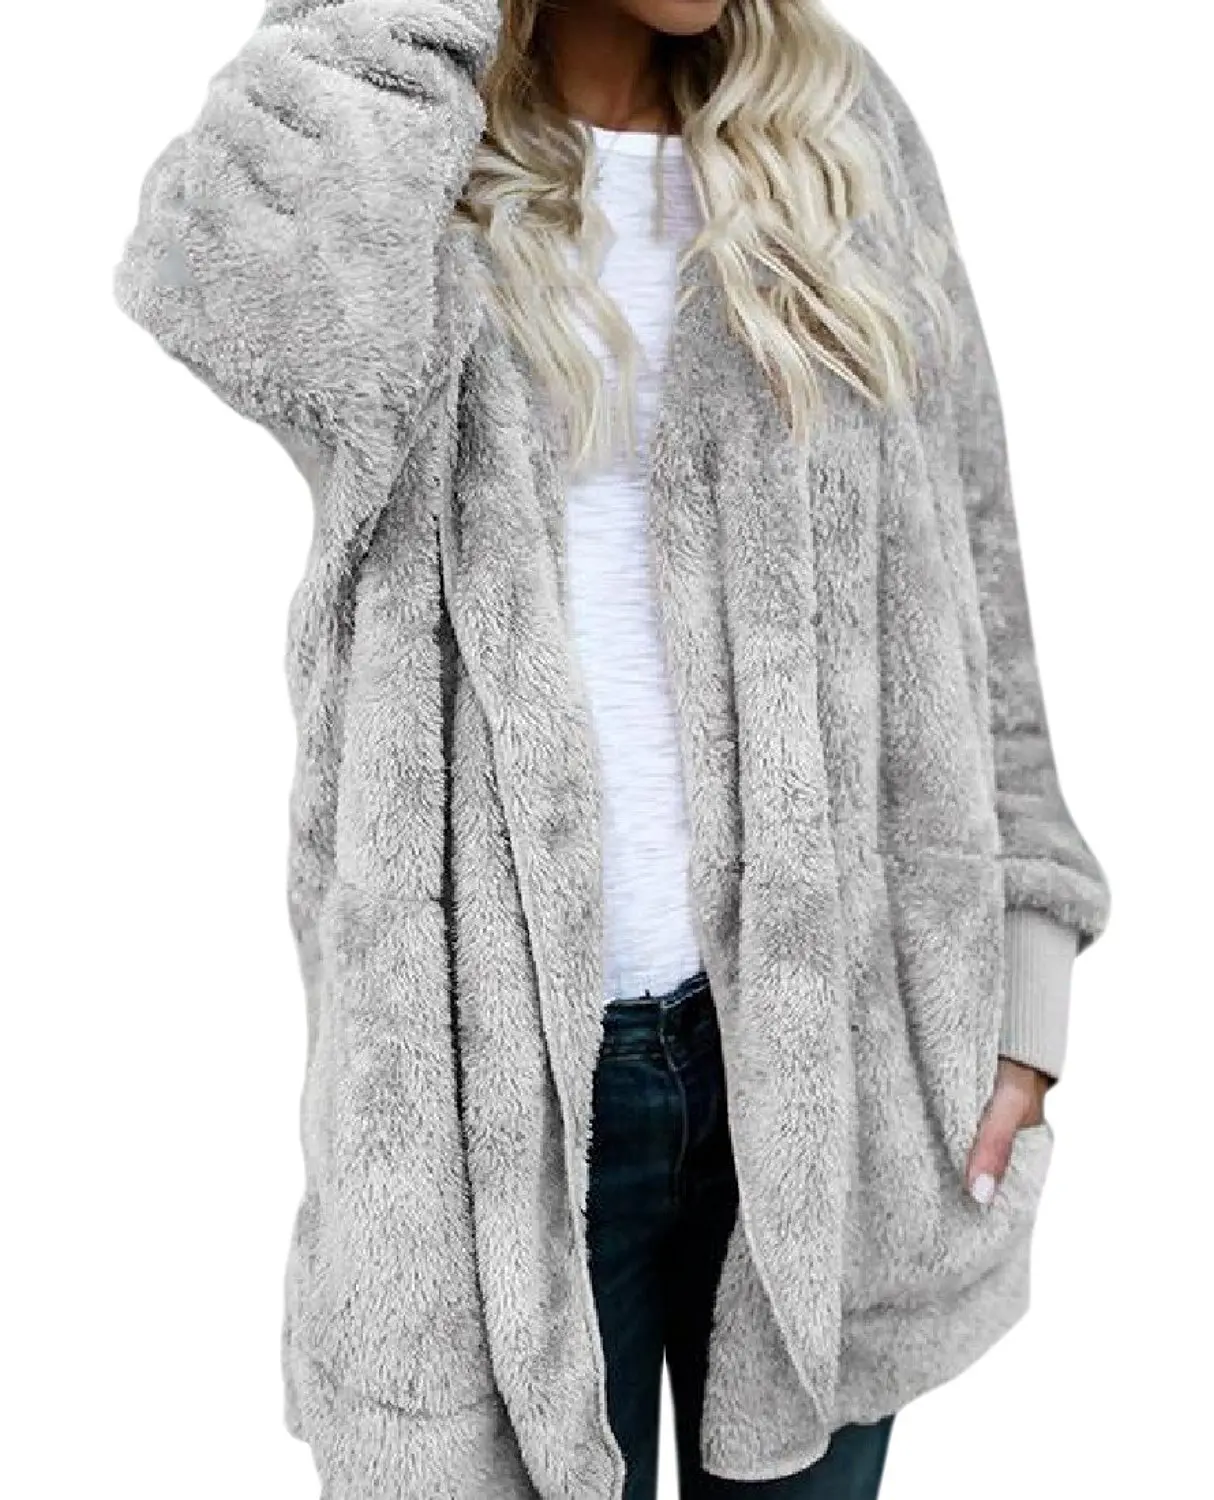 Cheap Fluffy Hood Coat, find Fluffy Hood Coat deals on line at Alibaba.com